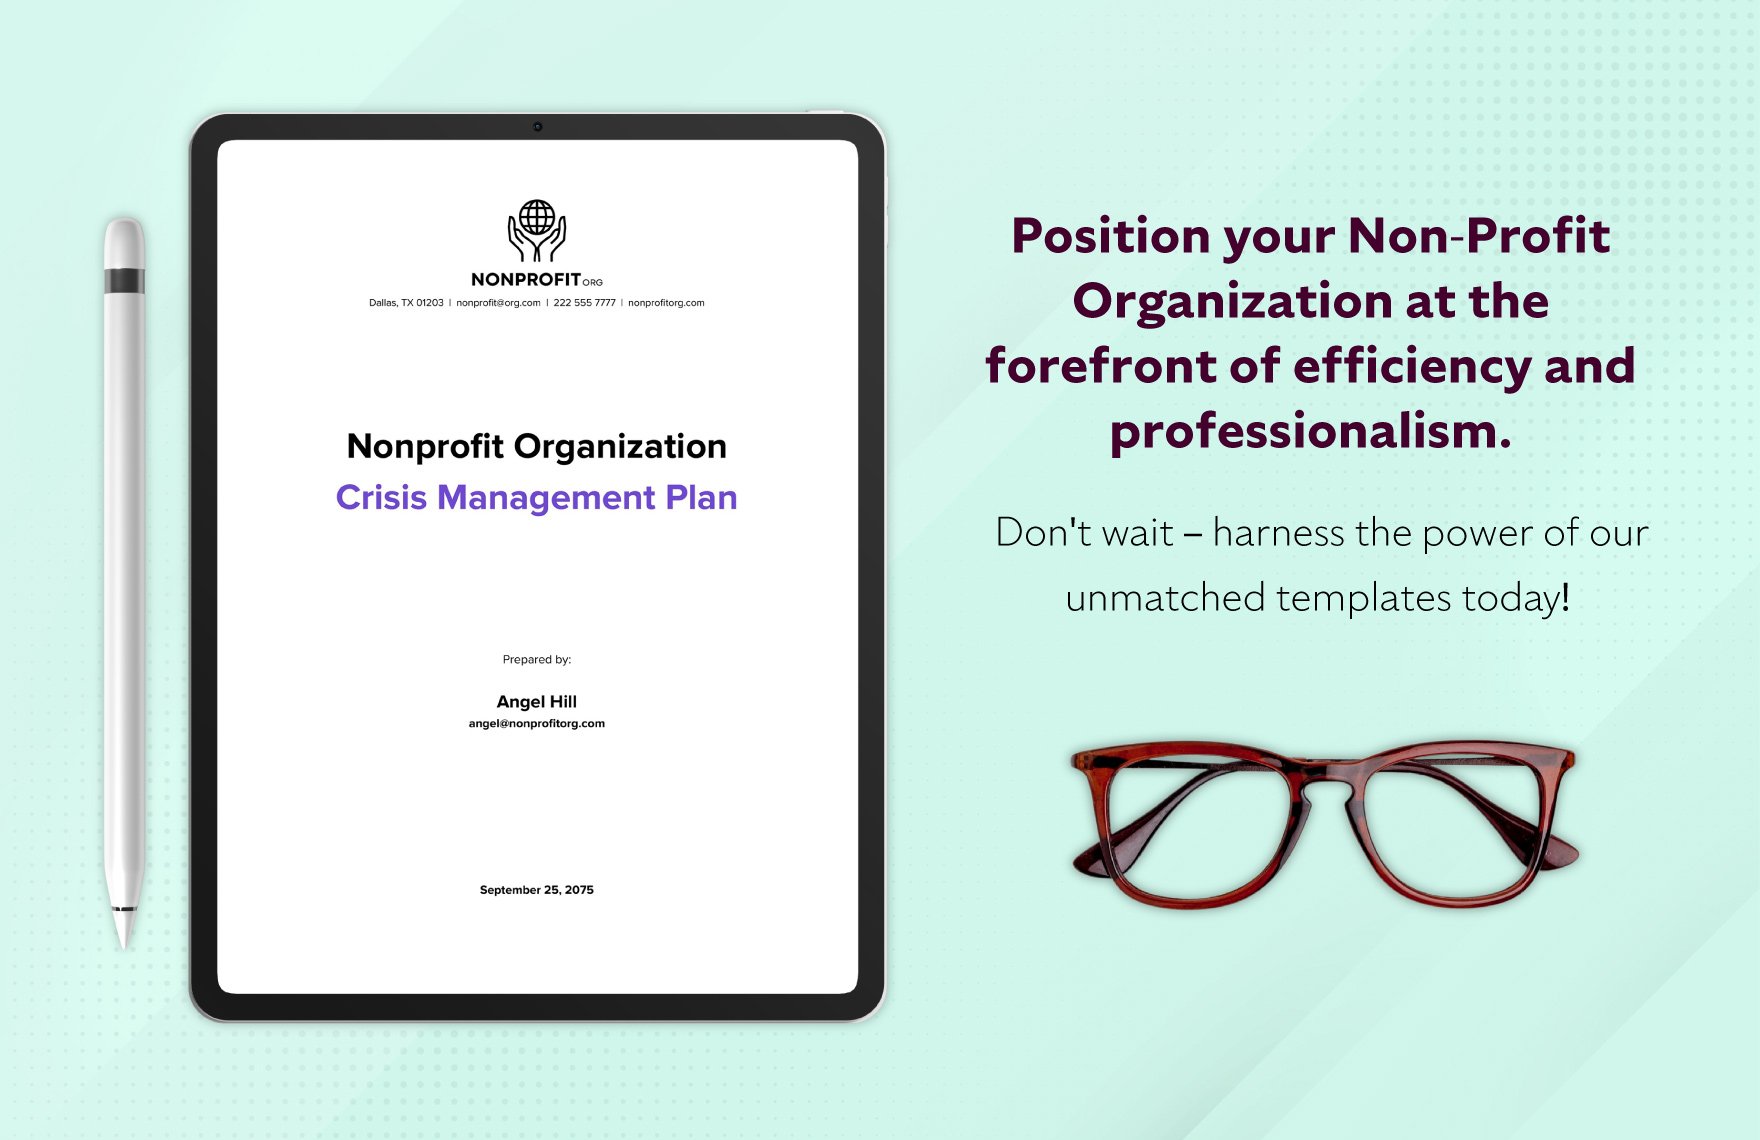 Nonprofit Organization Crisis Management Plan Template